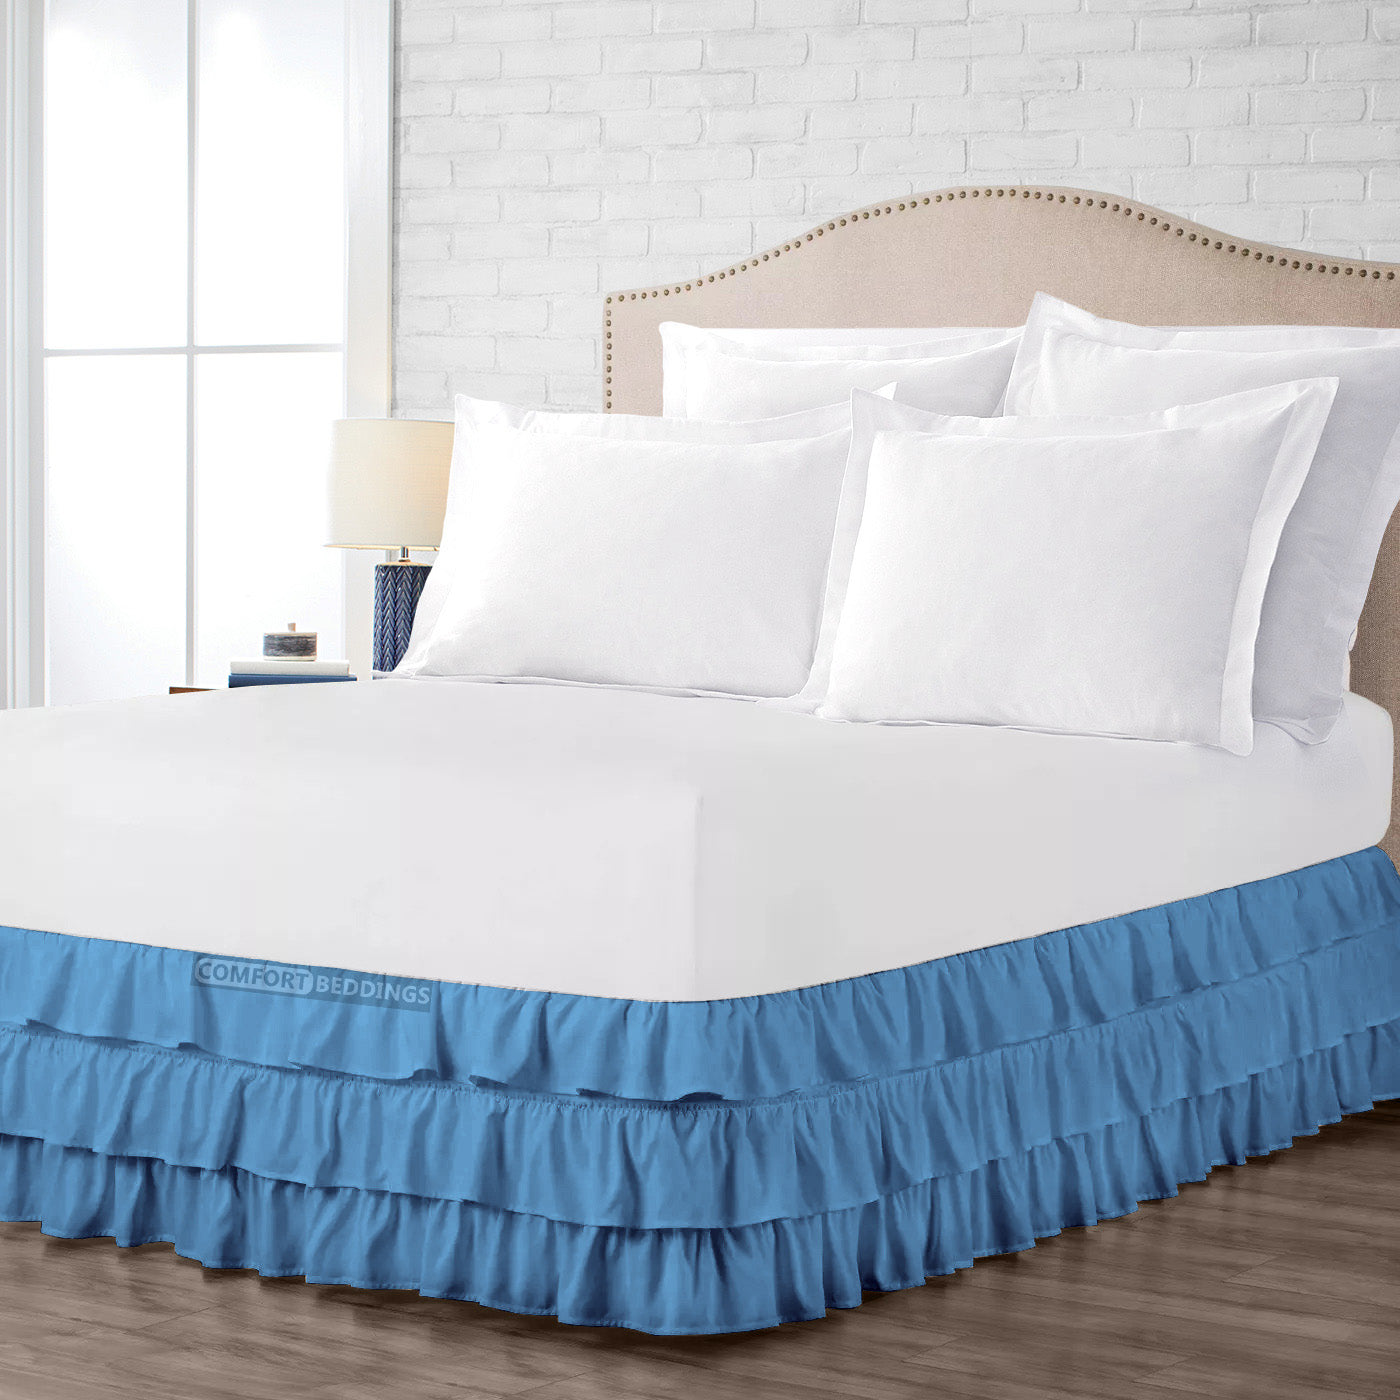 Mediterranean blue multi ruffled bed skirt